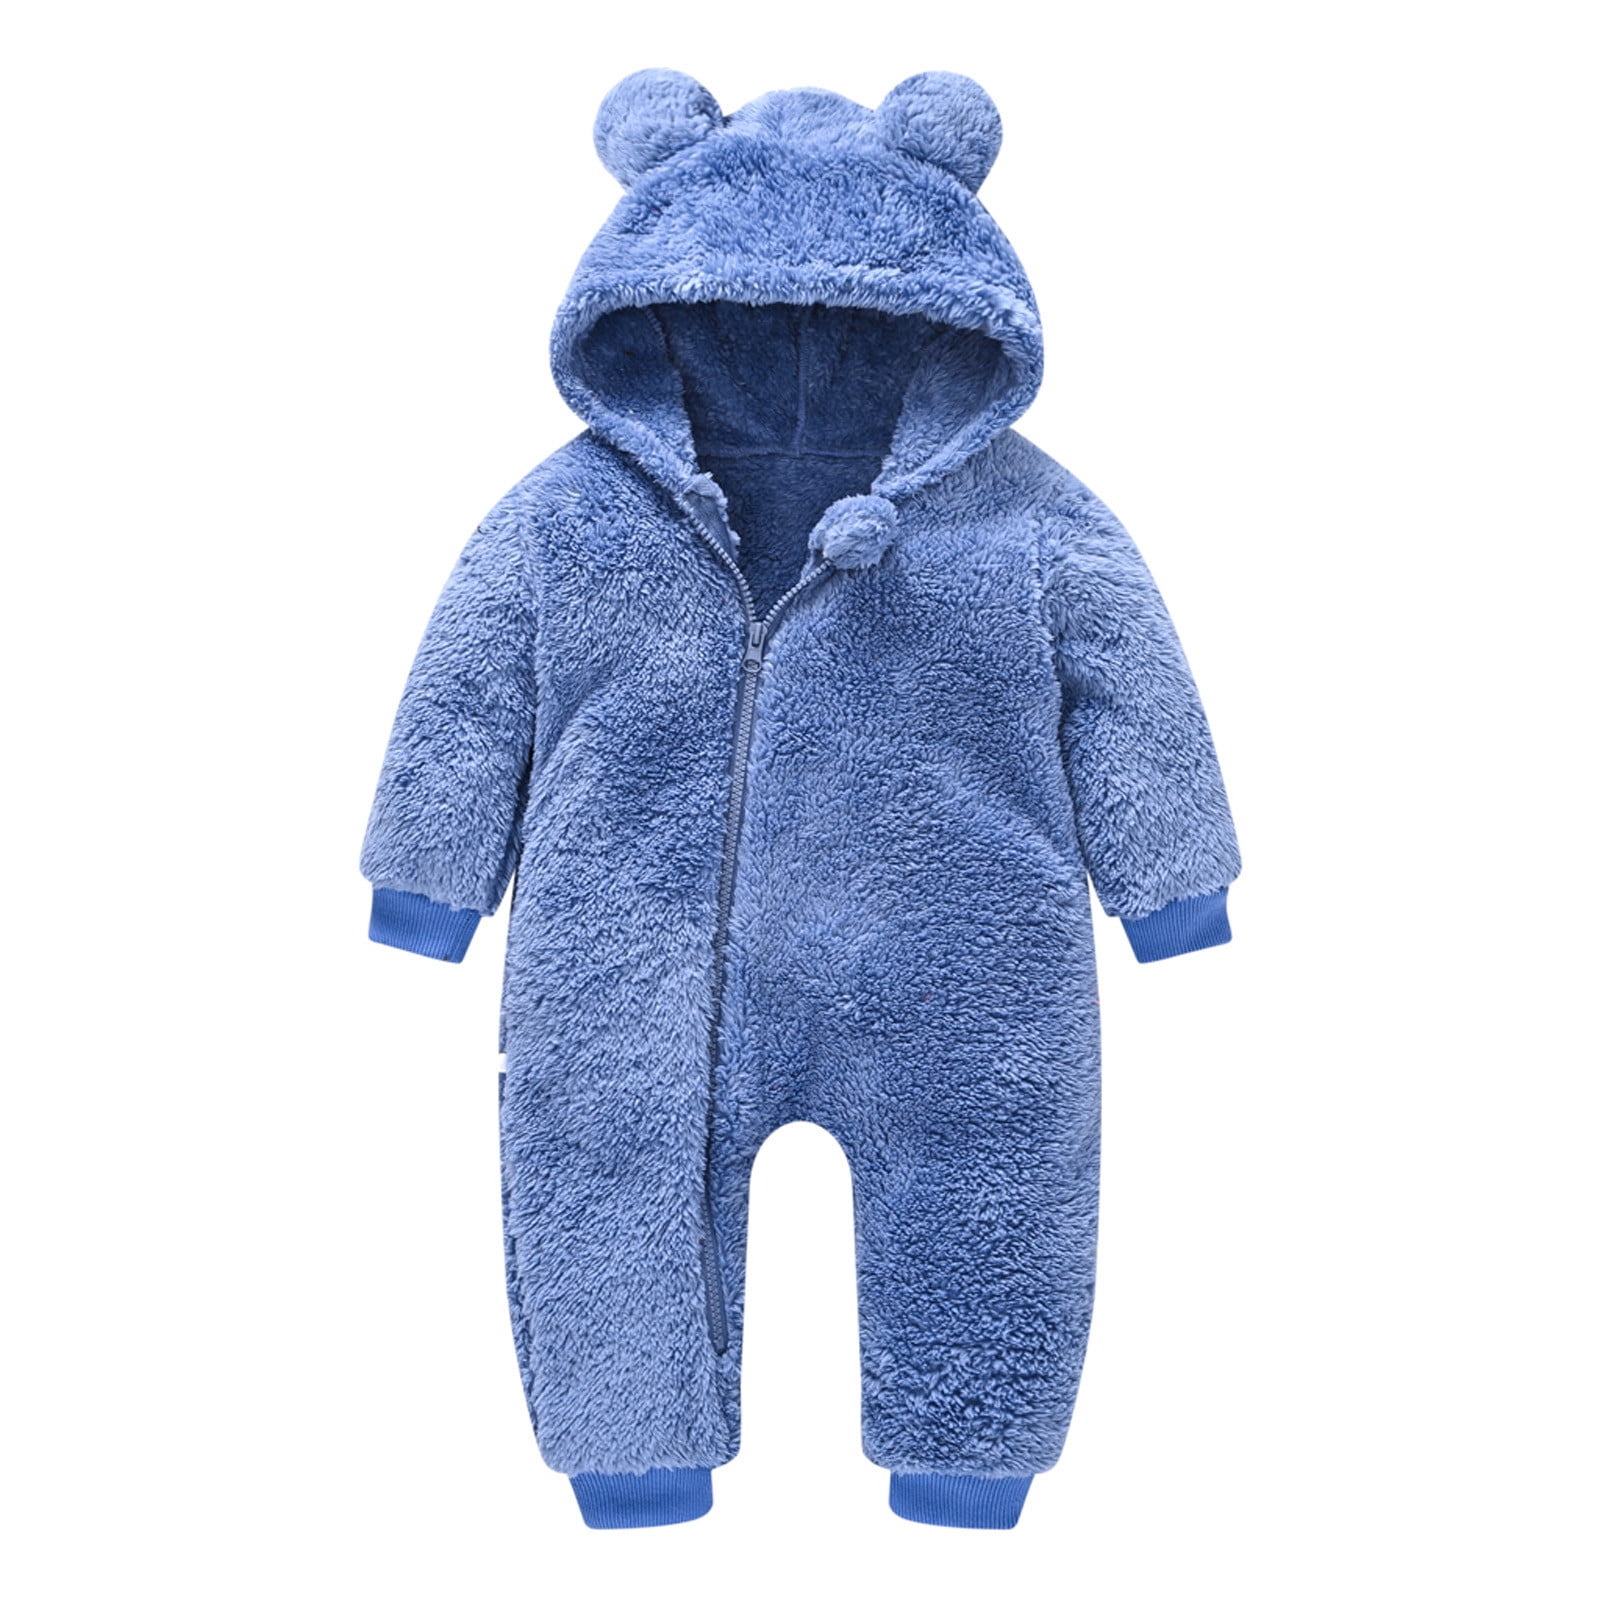 Lolmot Baby Girls Boys Winter Clothes Snowsuit Teddy Bear Onesie Outfit  Newborn Fleece Jumpsuit Romper Coat Hooded Suit on Clearance 